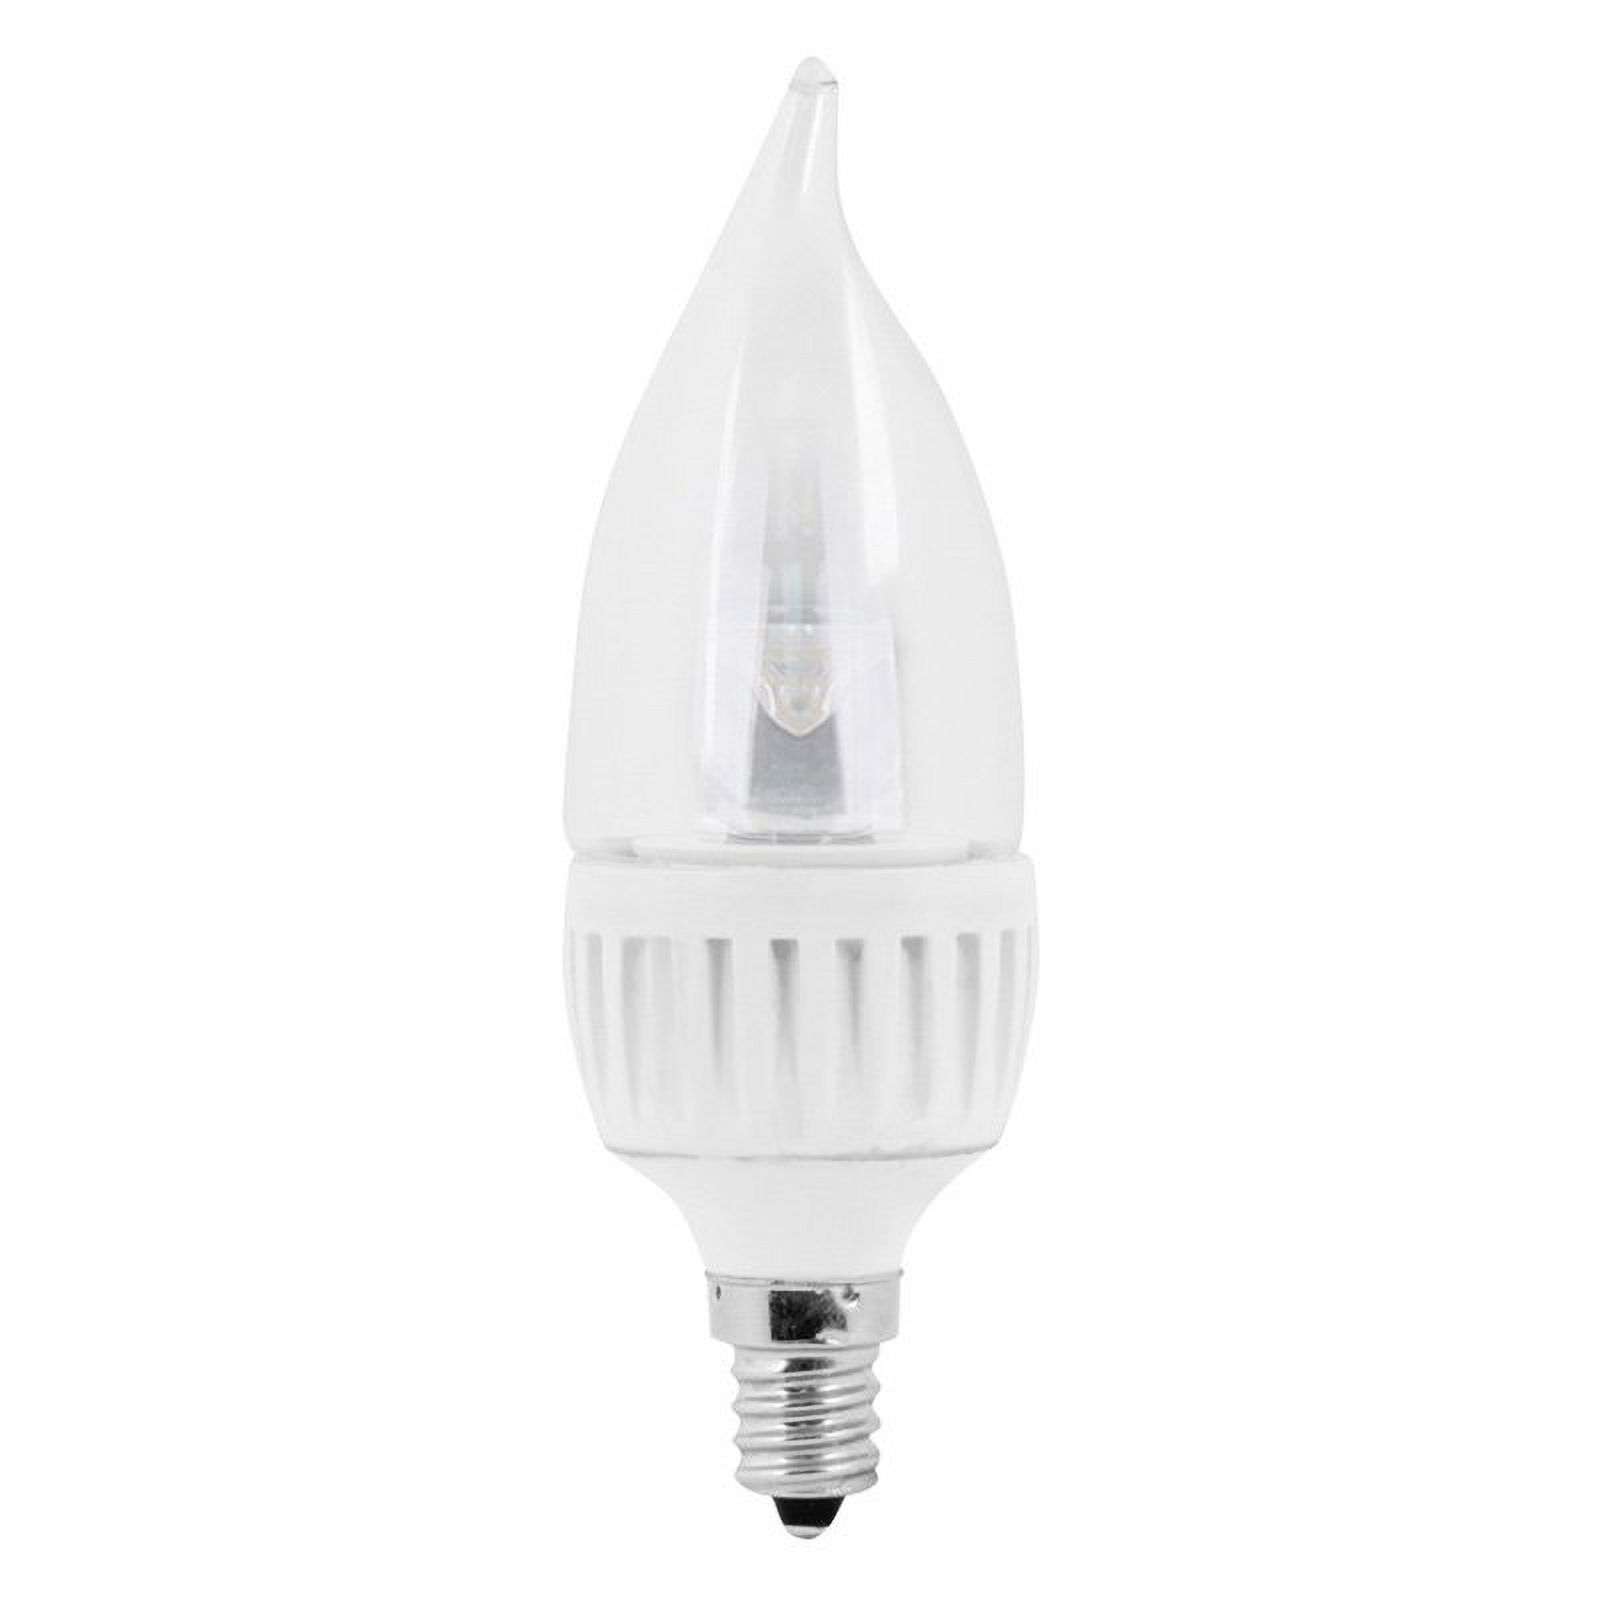 Feit Electric 4W LED Candelabra Light Bulb - 2 pk. - image 1 of 3